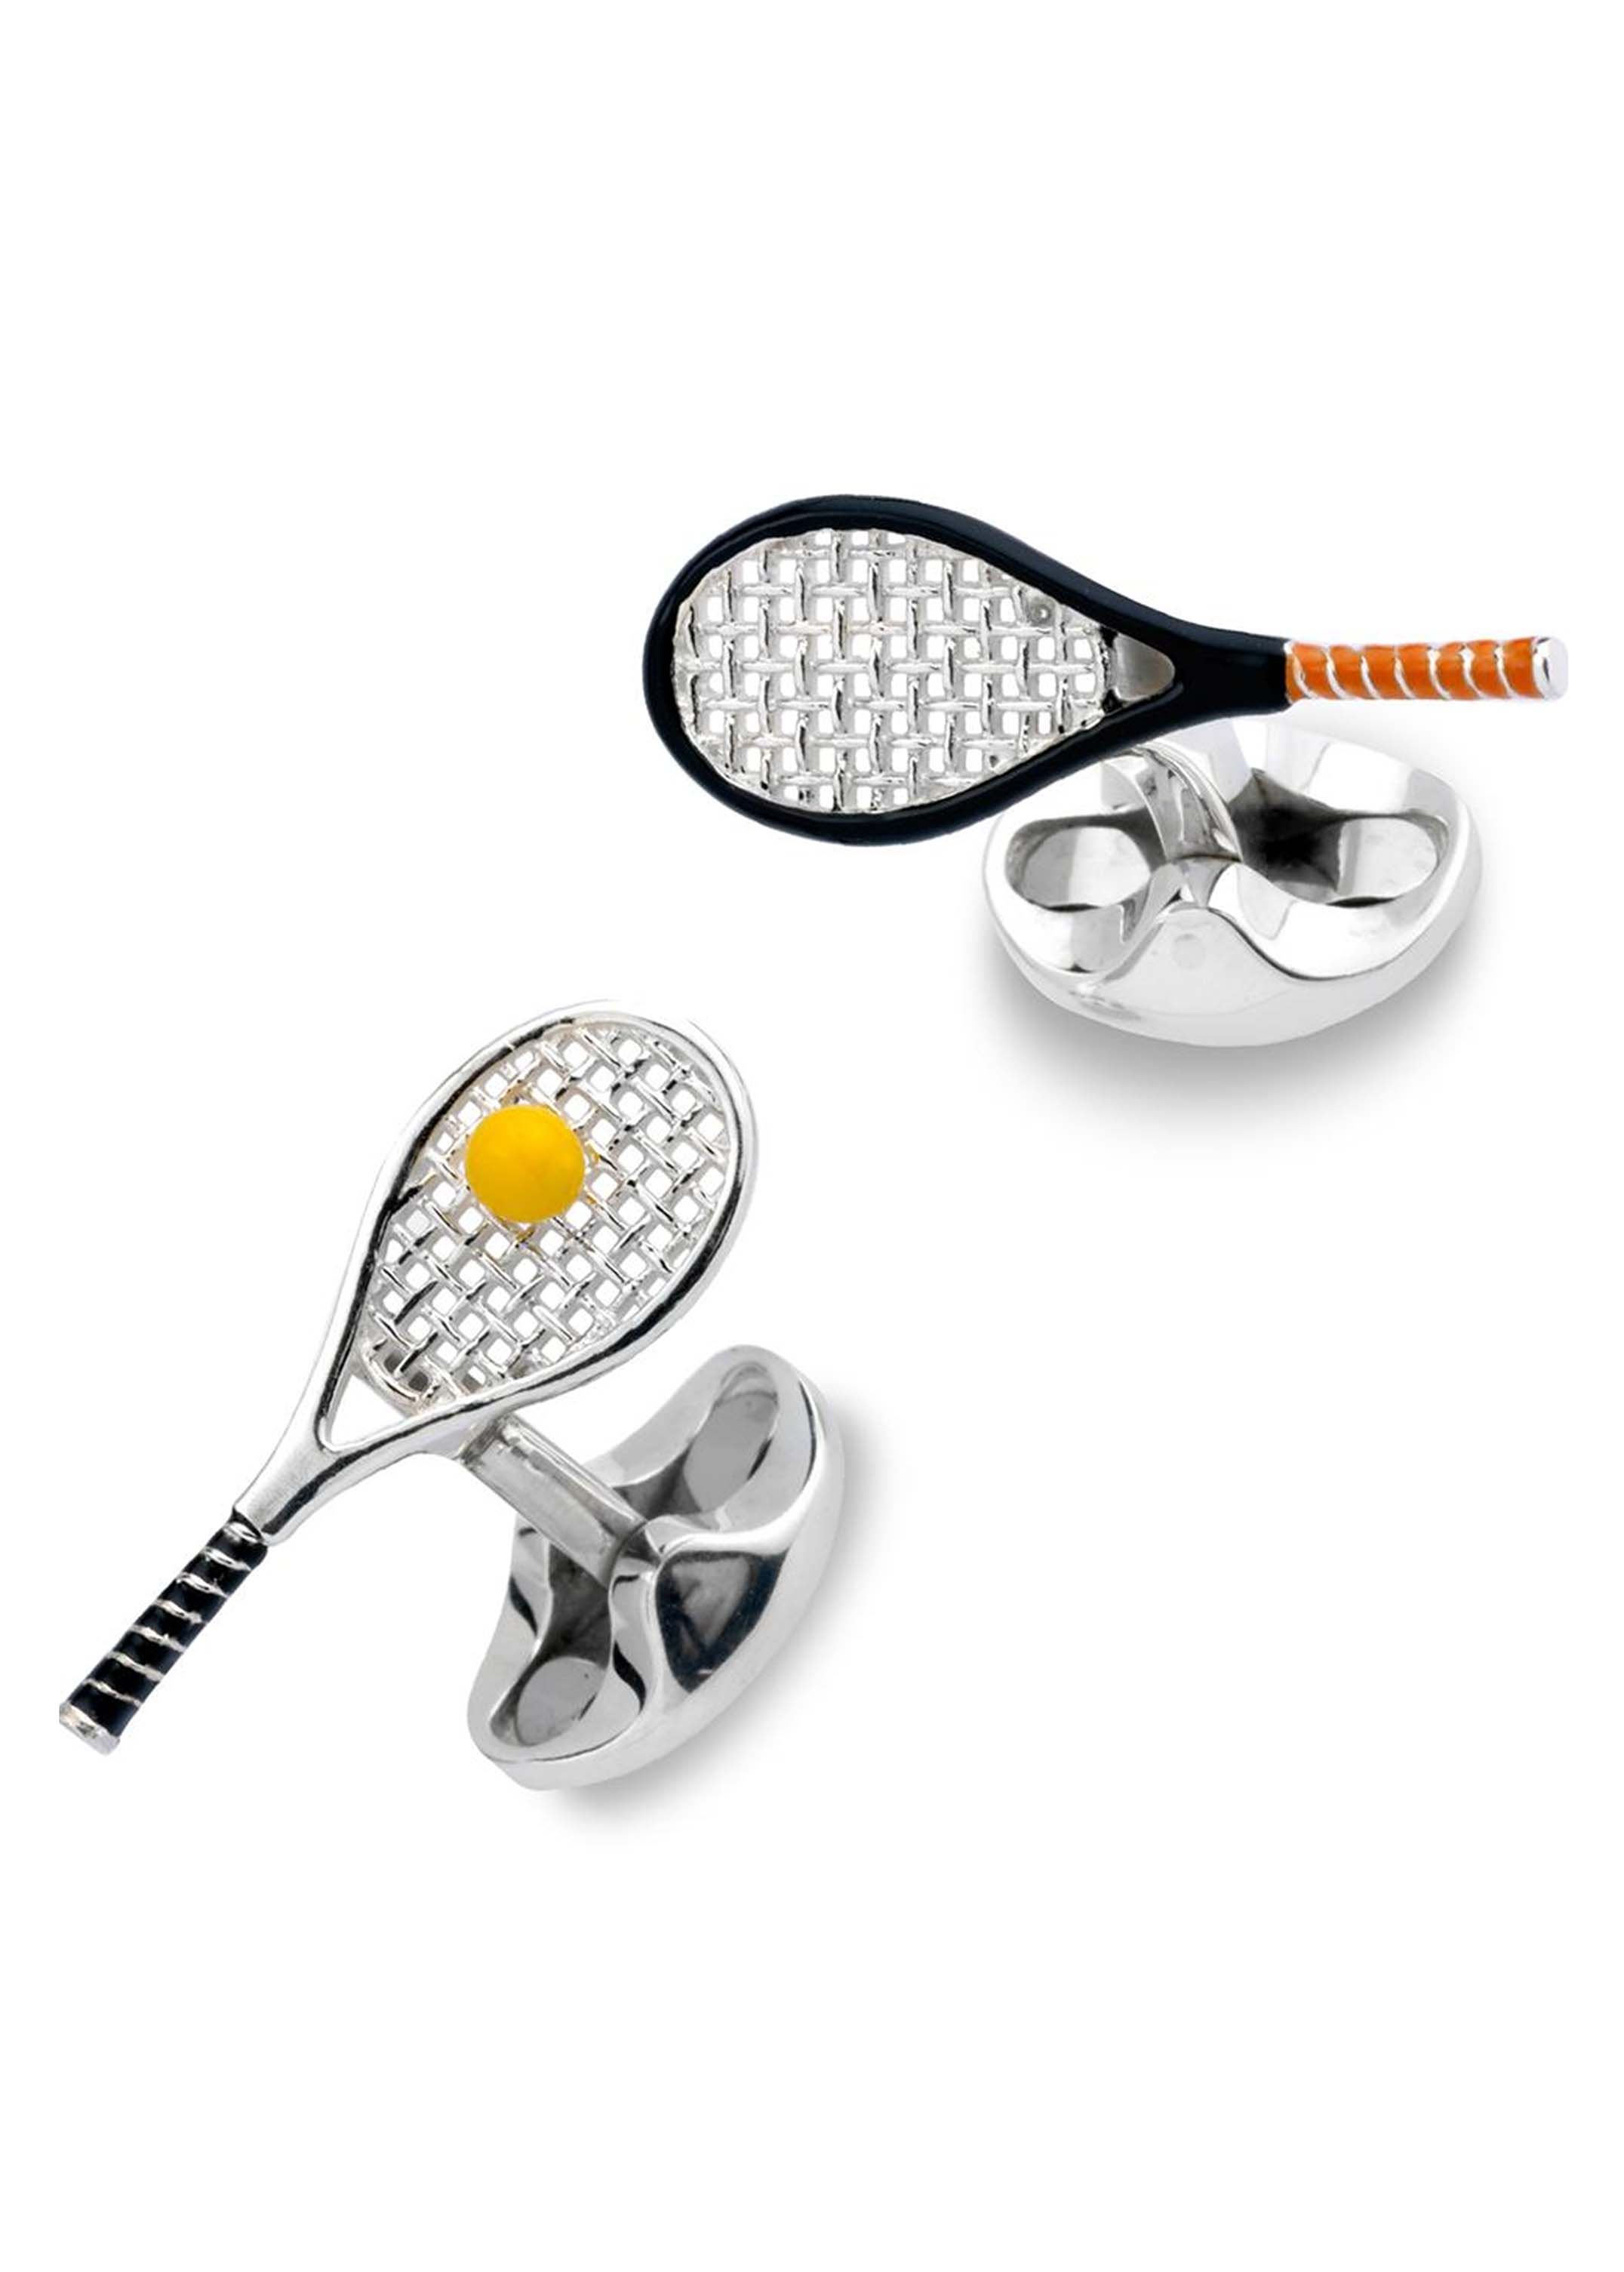 Silver Tennis Racket and Ball Cufflinks Image